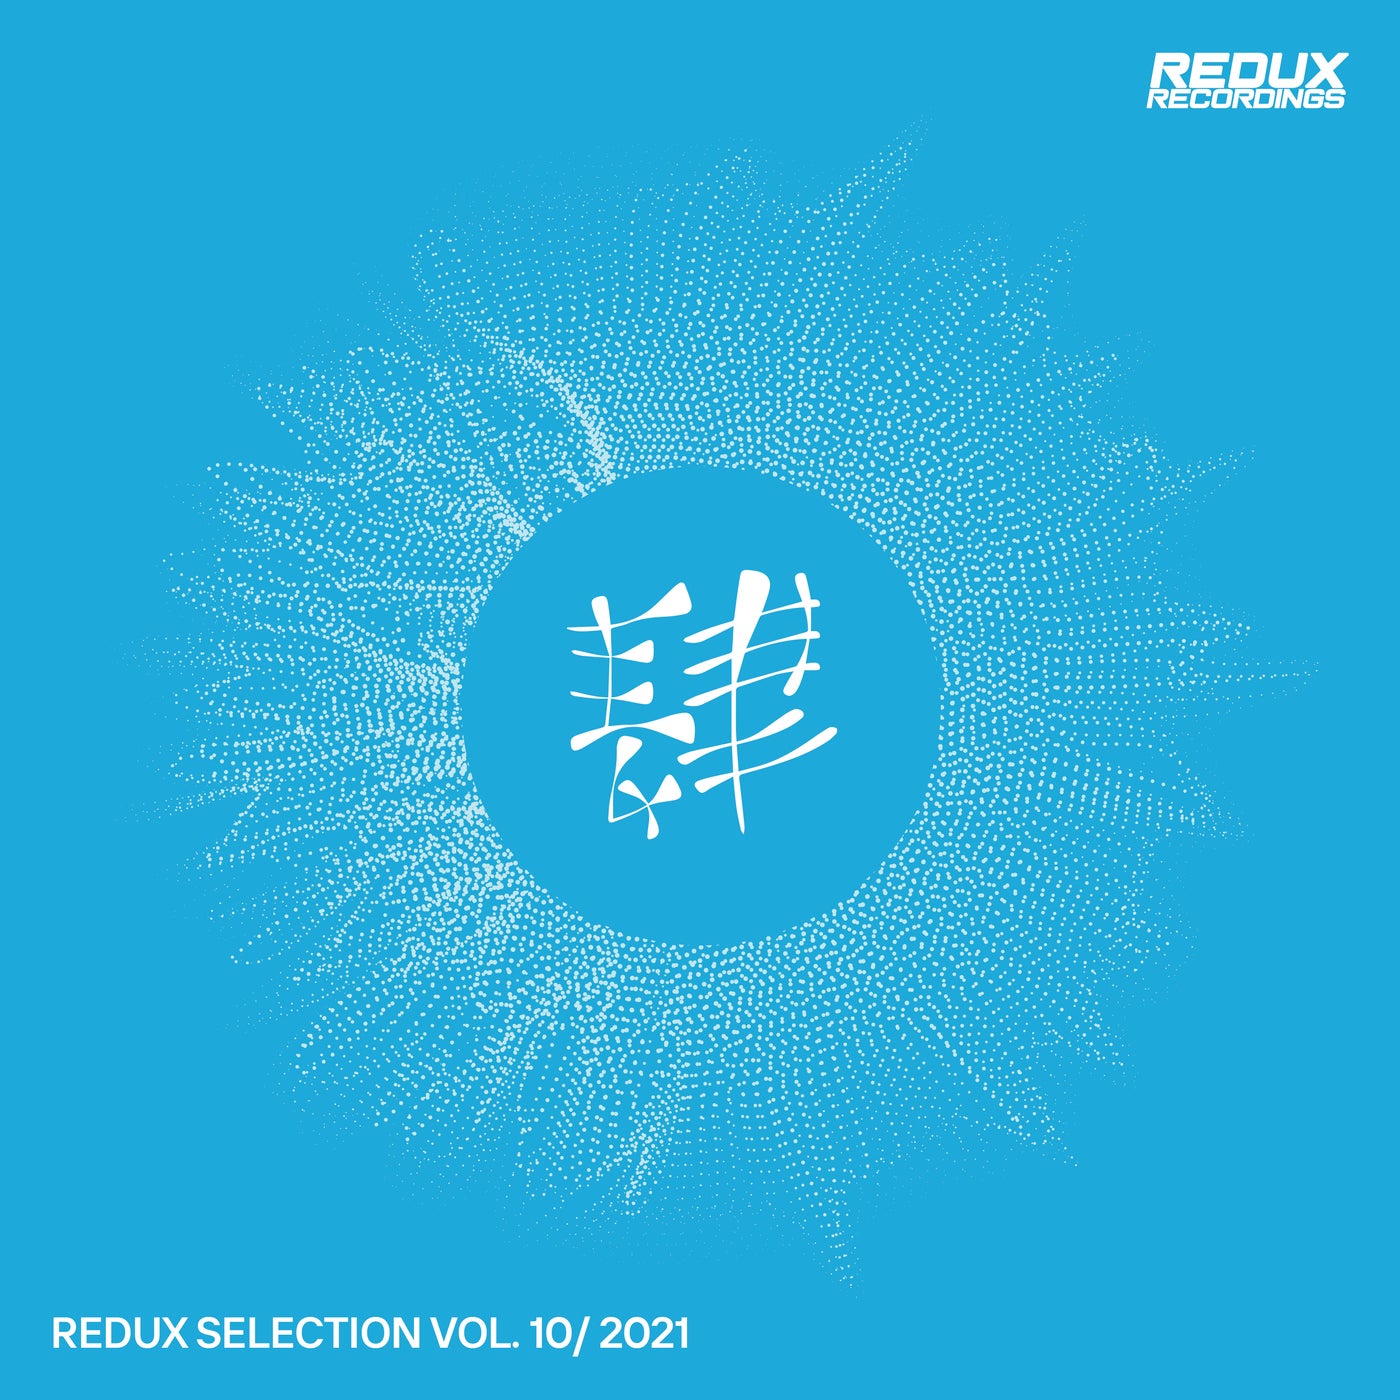 Redux Selection Vol. 10 / 2021